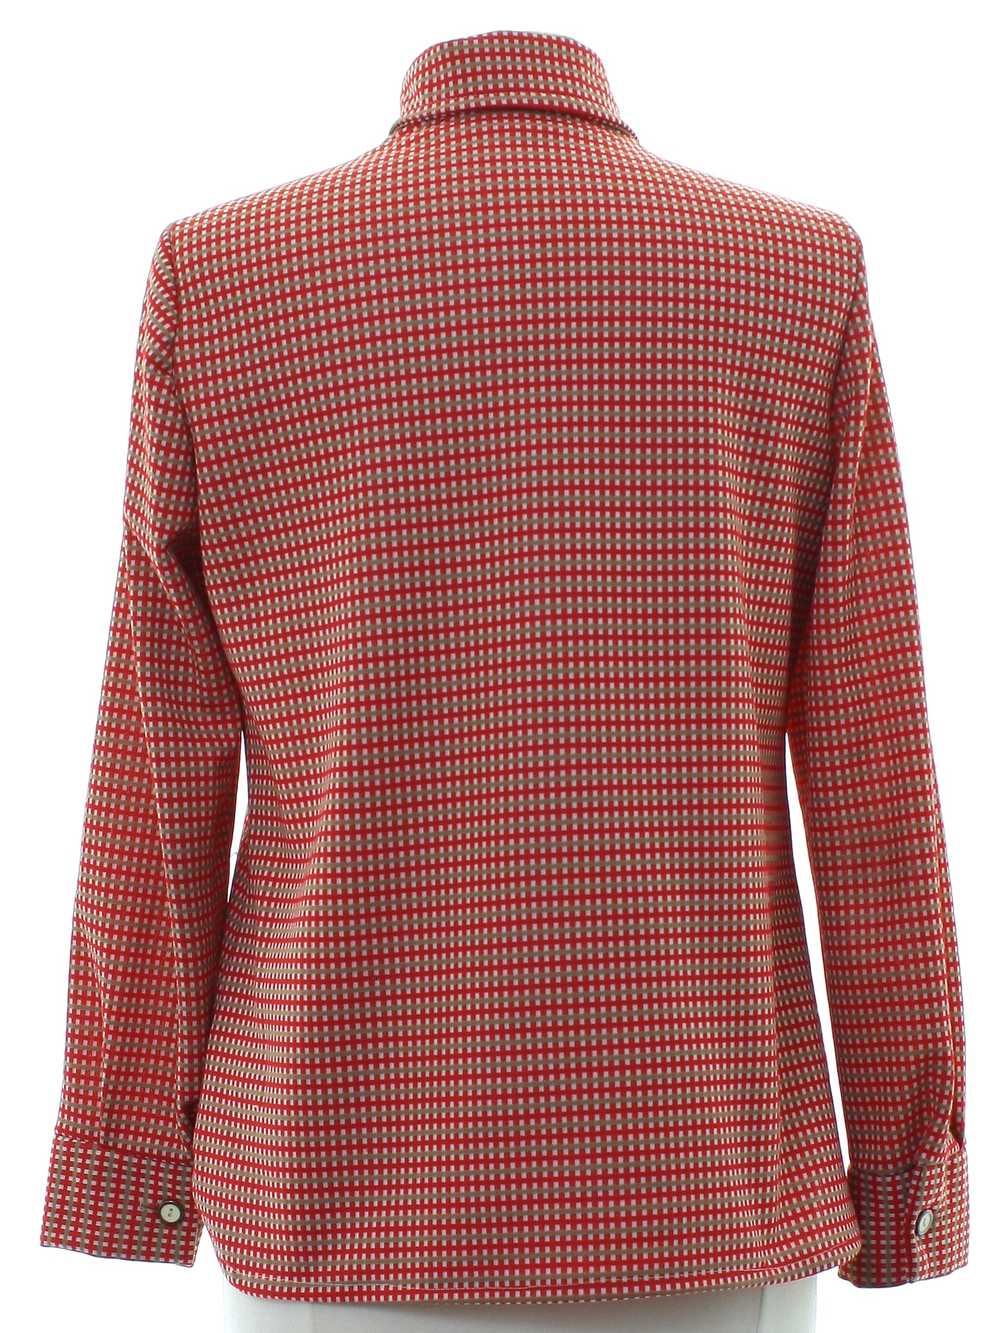 1970's Womens Knit Western Style Shirt jacket - image 3